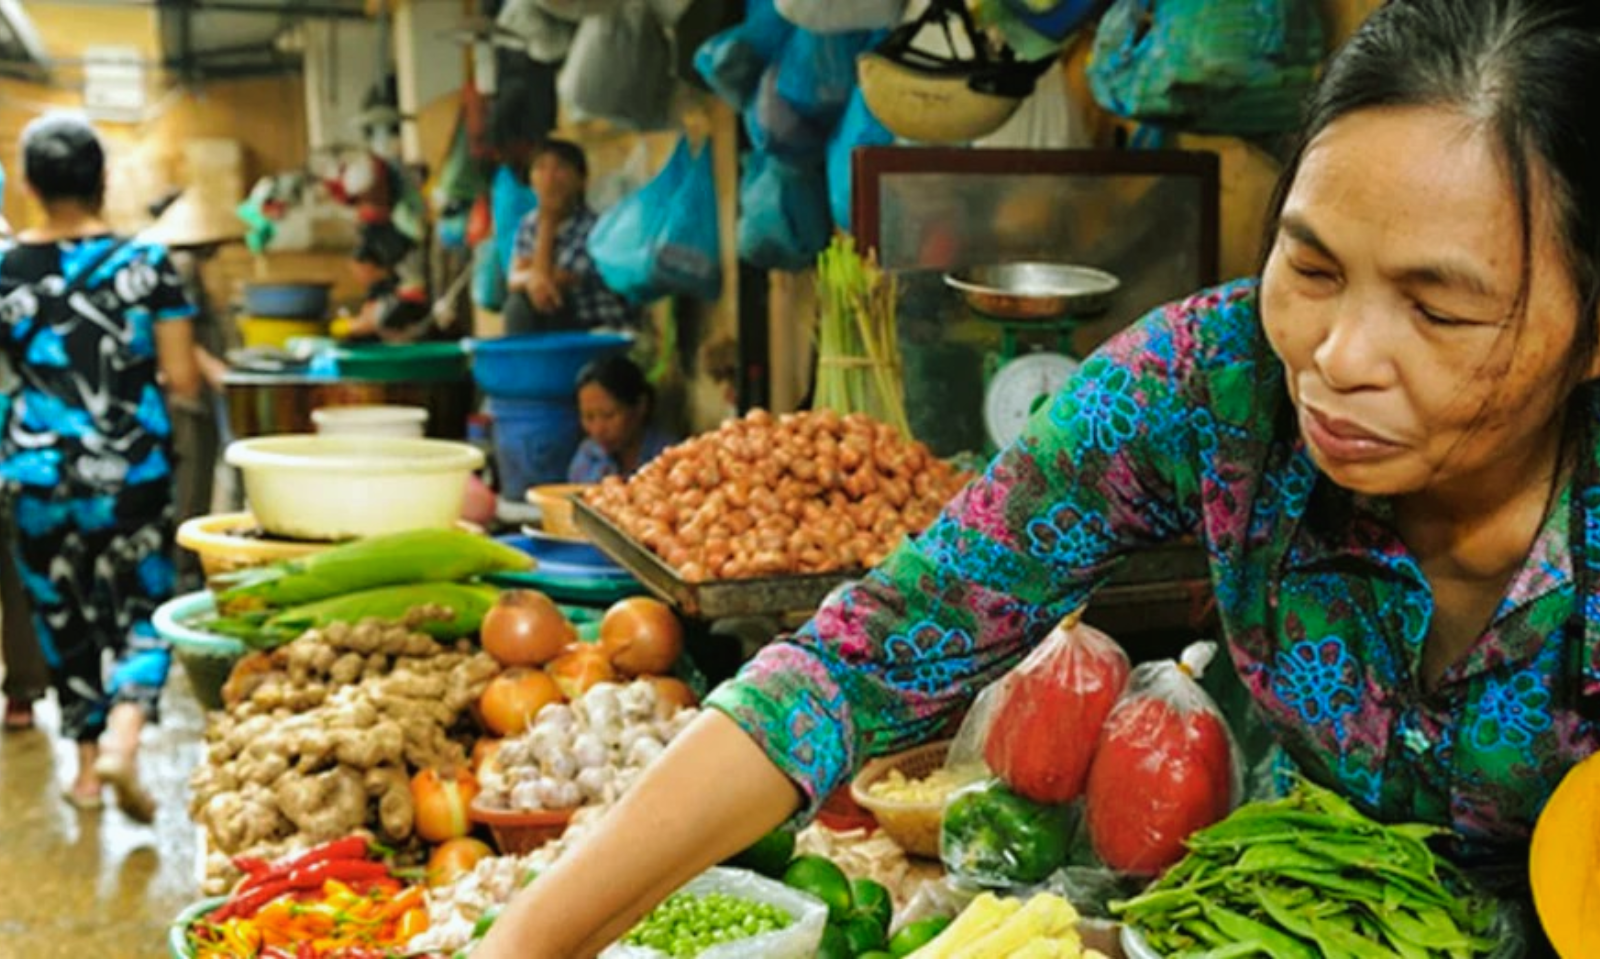 Top 15 Funny And Healthy Outdoor Activities To Enrich Your Travel In Vietnam